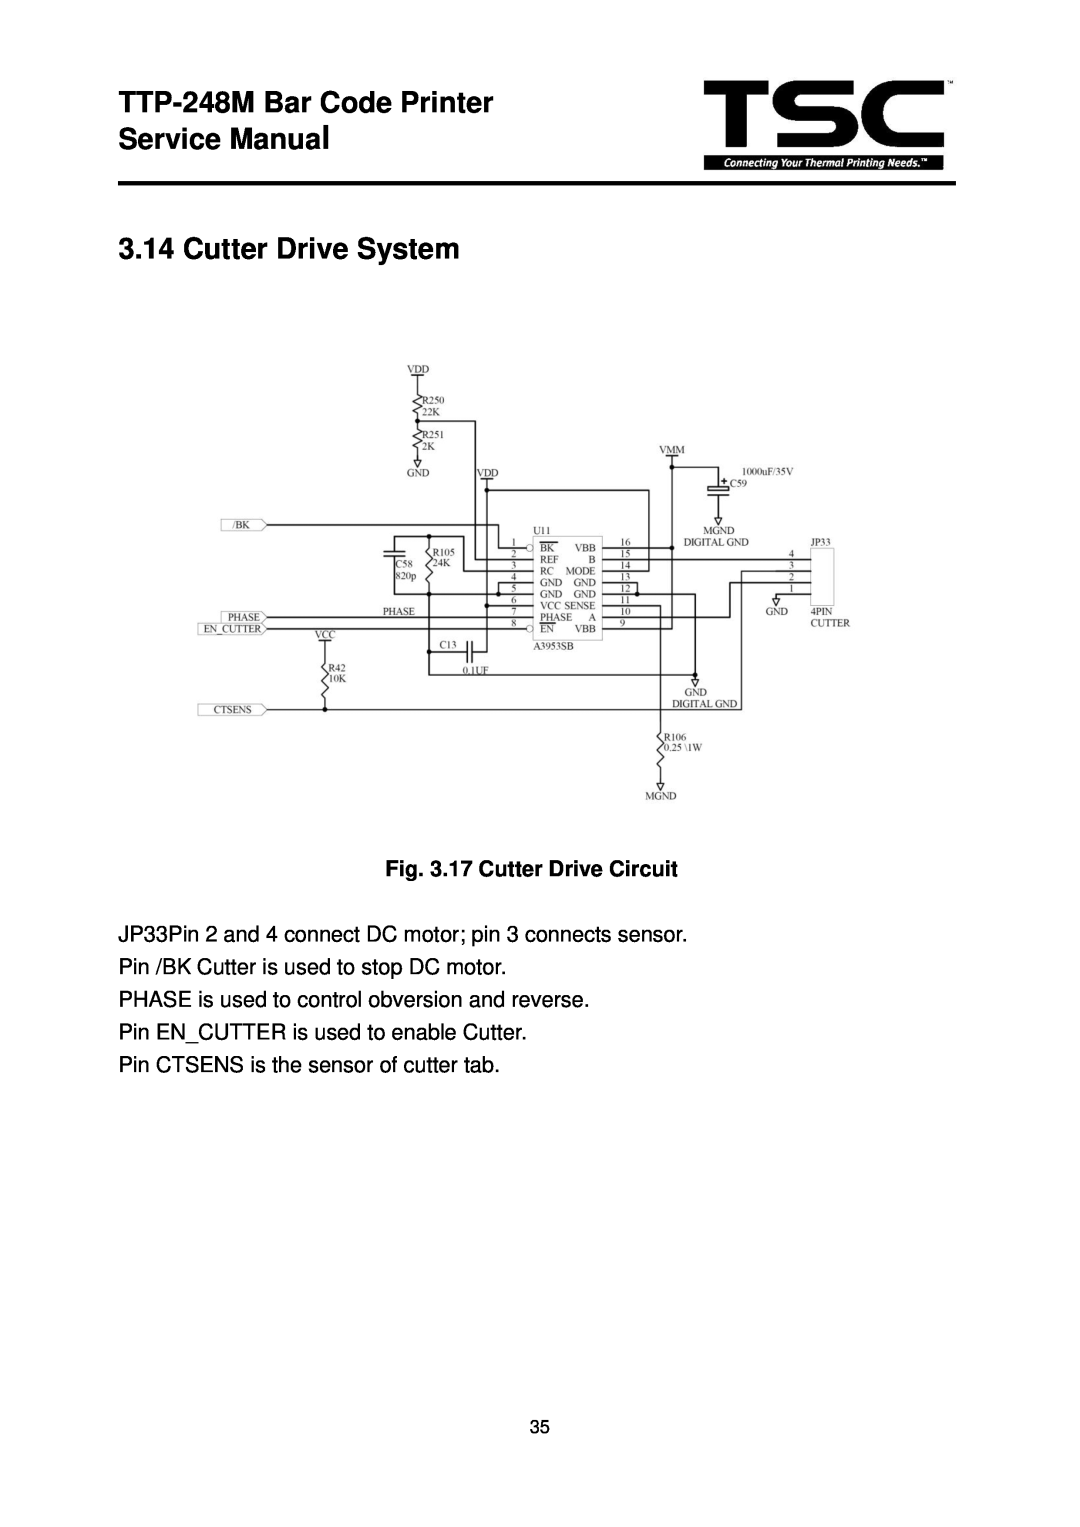 The Speaker Company TTP 248M TTP-248M Bar Code Printer Service Manual 3.14 Cutter Drive System, 17 Cutter Drive Circuit 